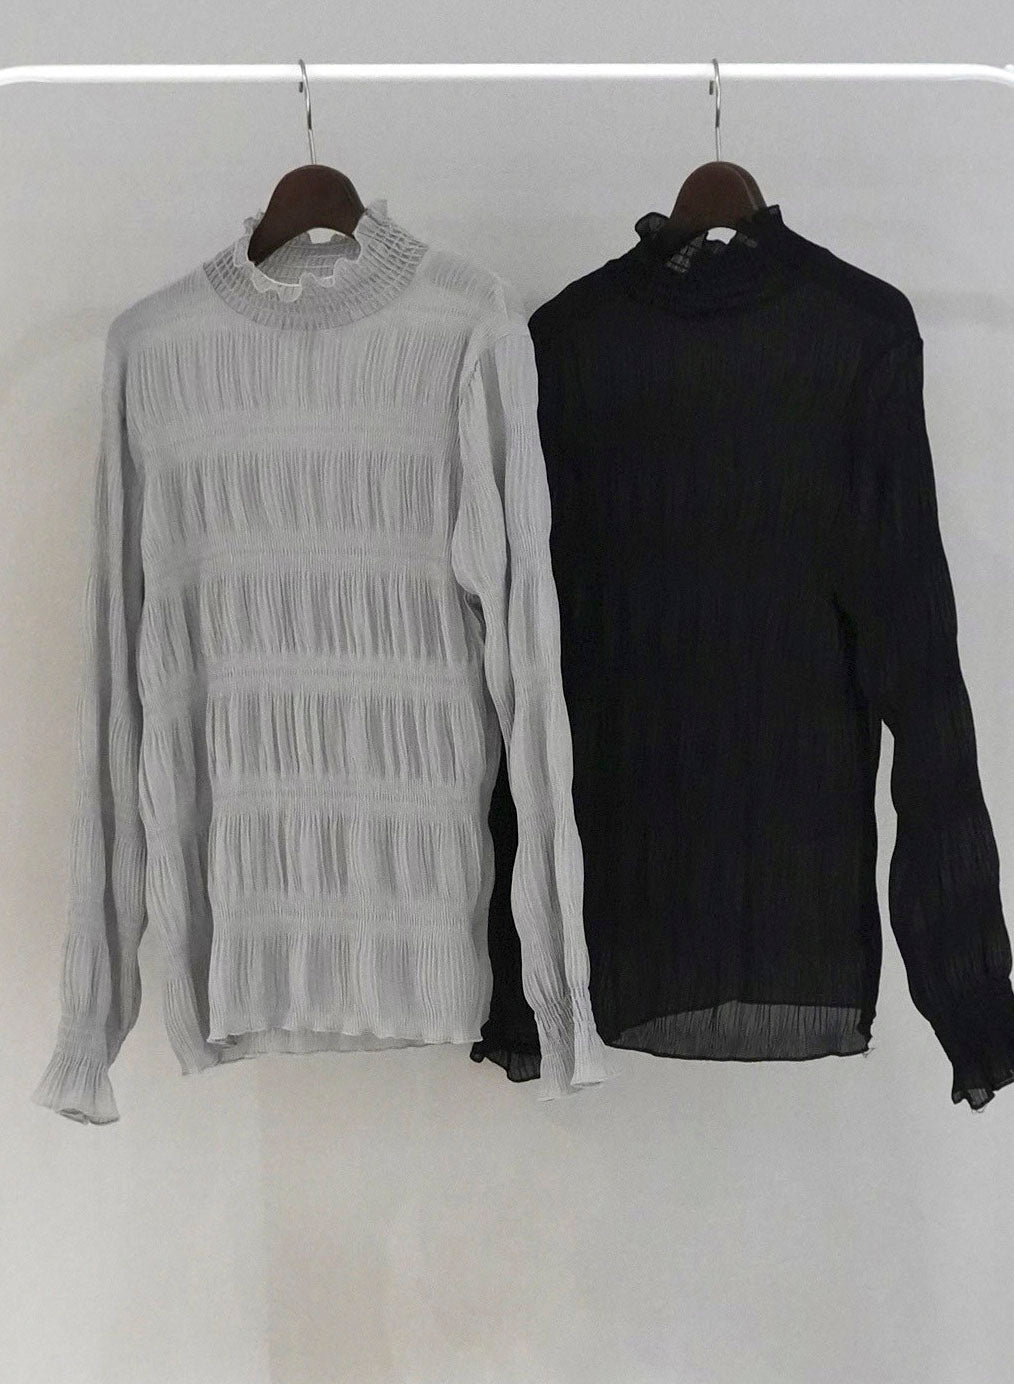 [SET] Front zip denim fringe dress + shirred chiffon blouse (2set)